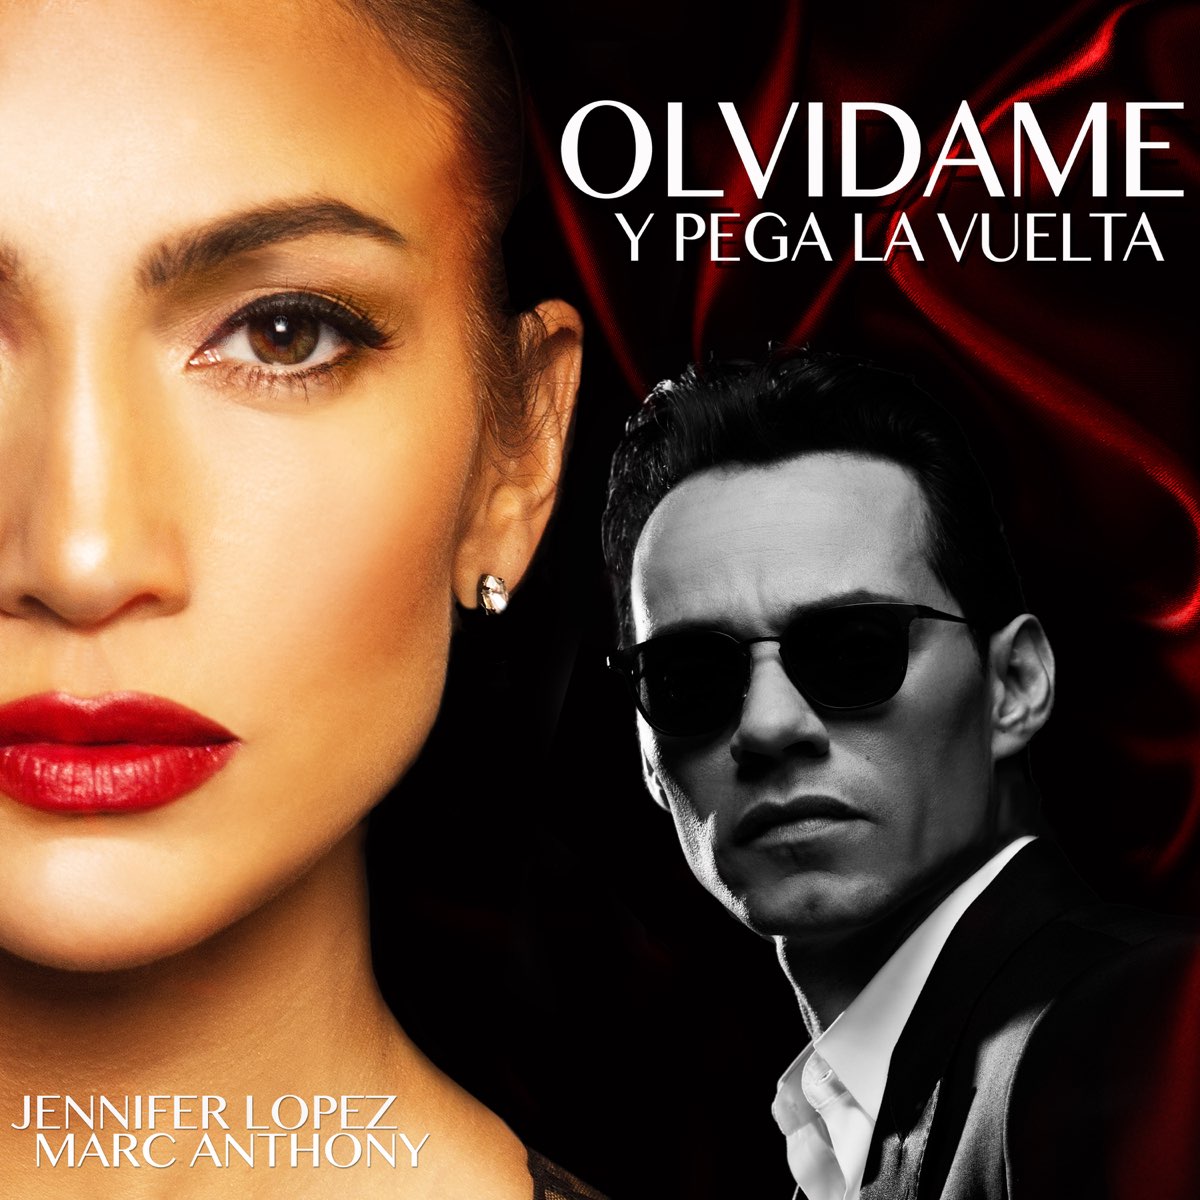 Jennifer Lopez & Marc Anthony Olvídame y Pega la Vuelta cover artwork